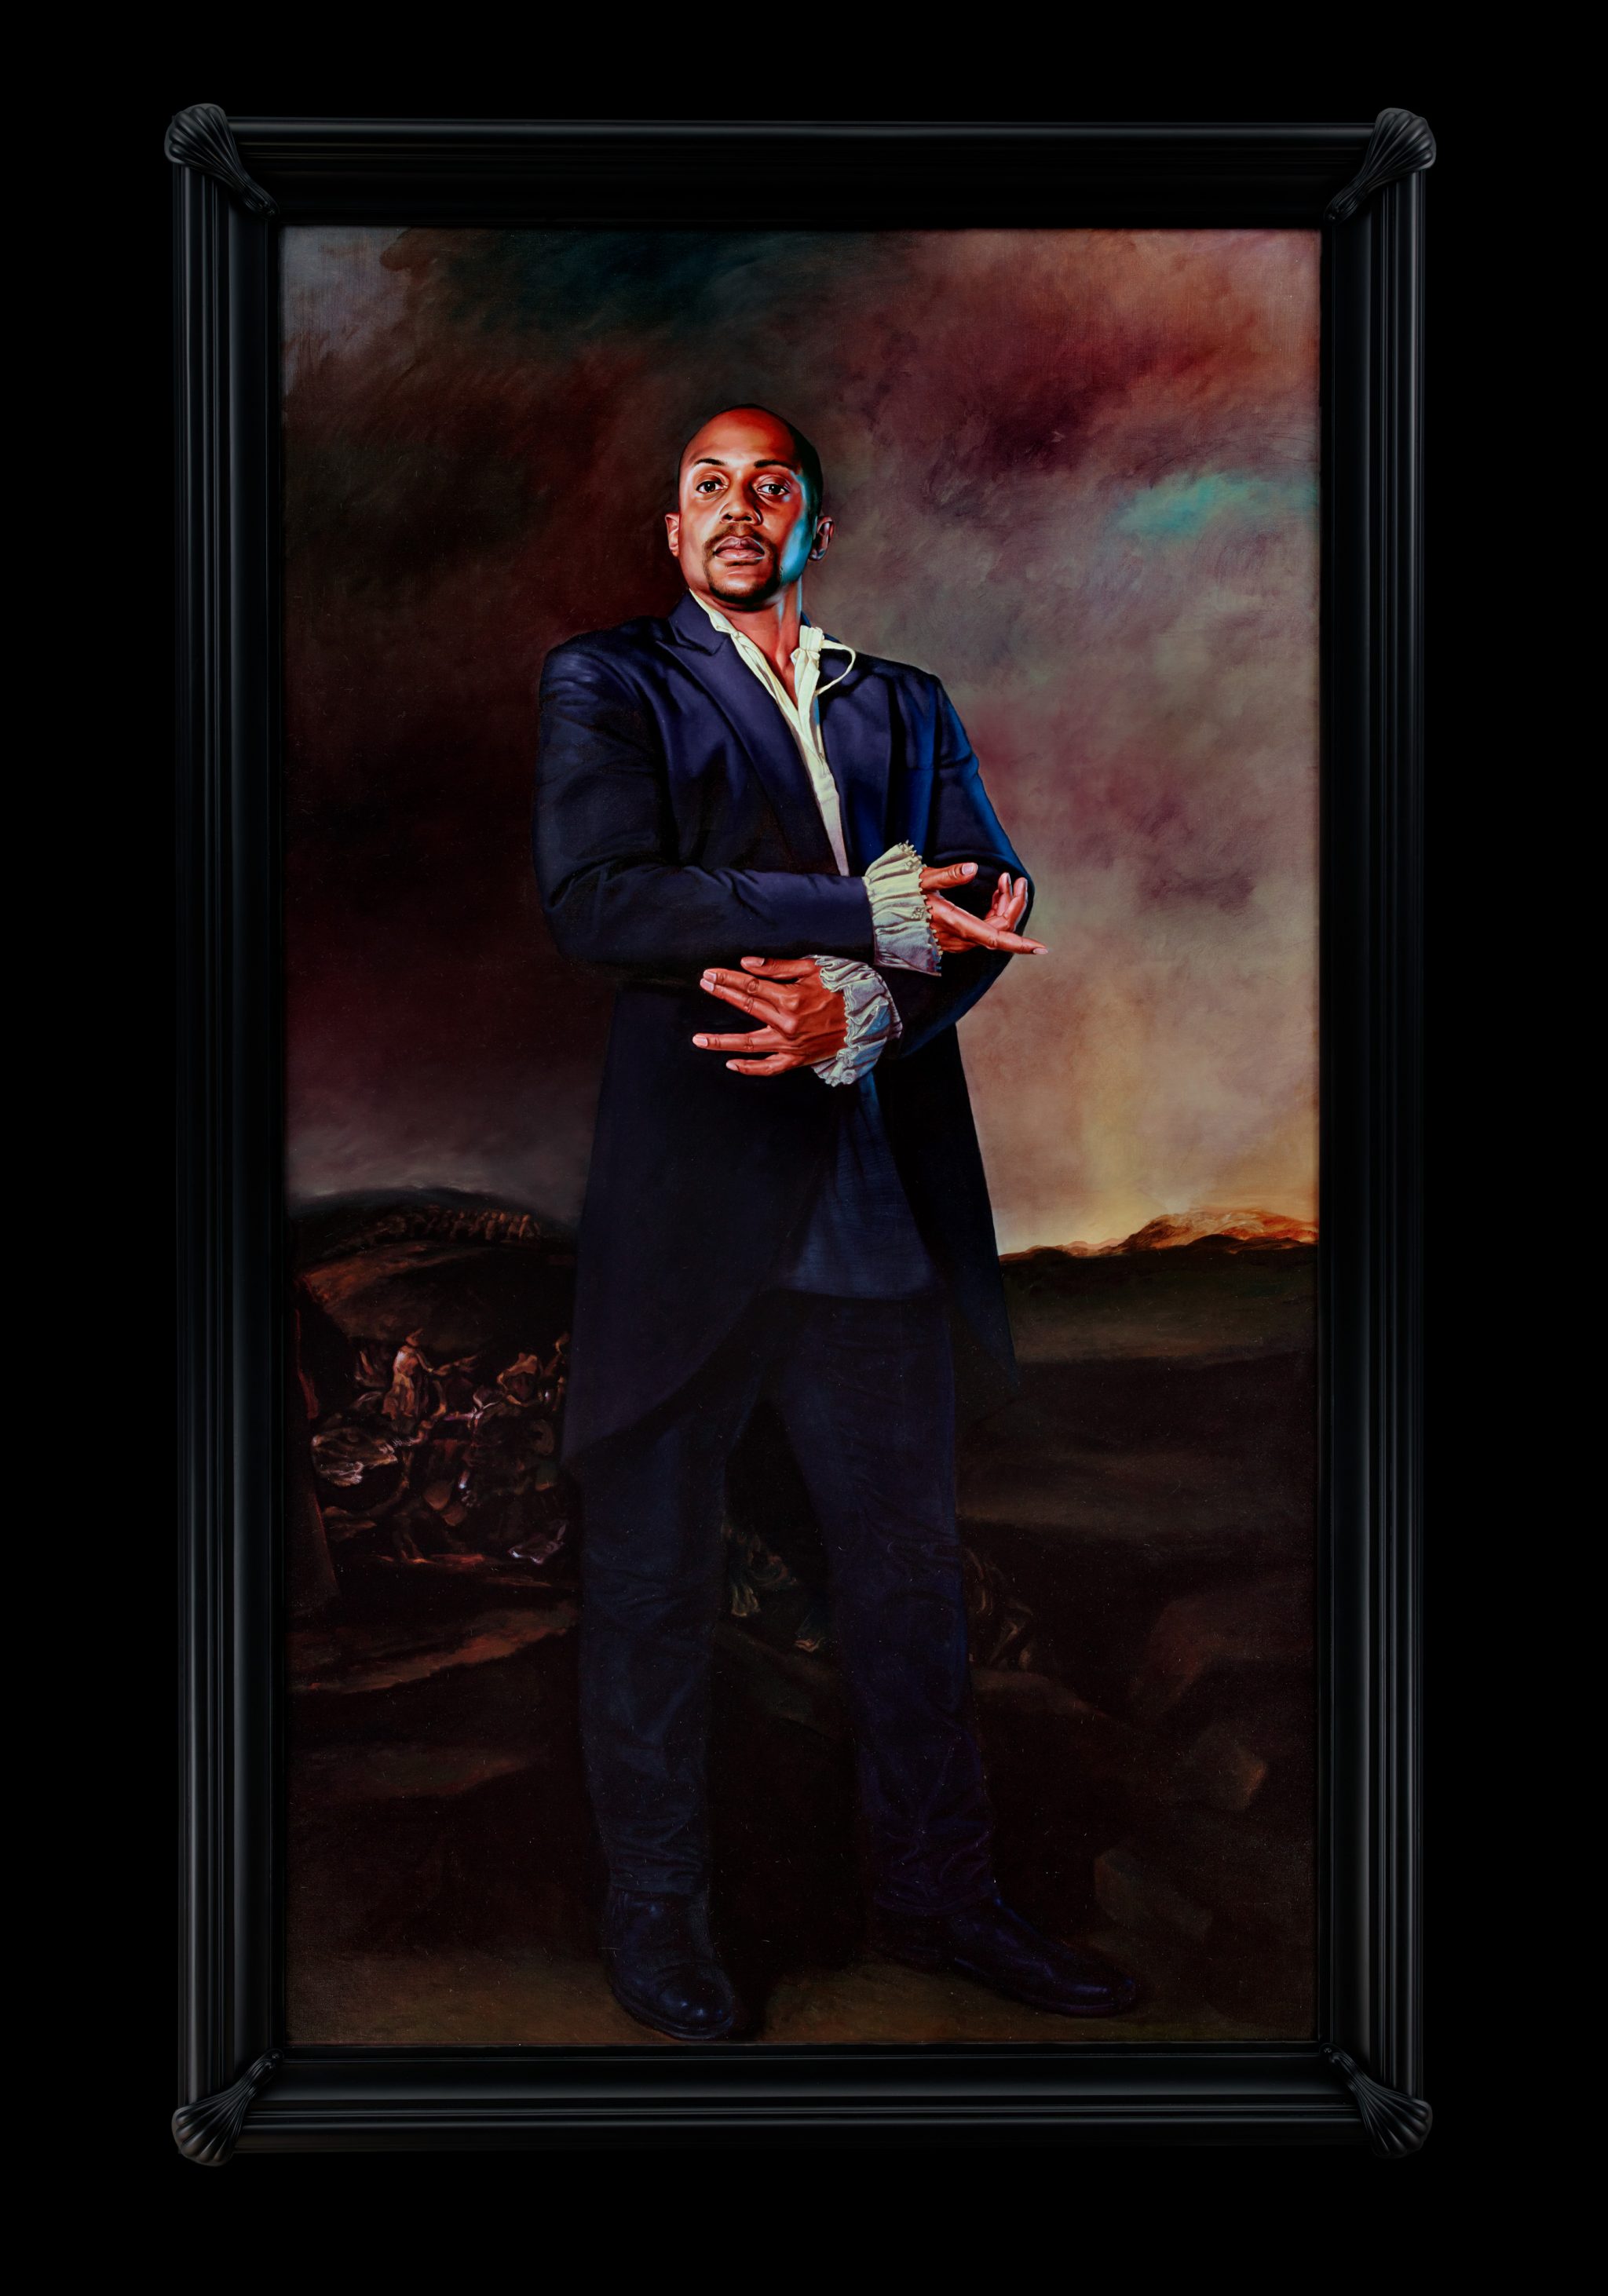 Kehinde Wiley | Trickster, Sean Kelly Gallery, New York City, USA, May 6 - June 17, 2017 | Portrait of Hank Willis Thomas, La Romeria de san Isidro,2017 Oil on Canvas. | 14